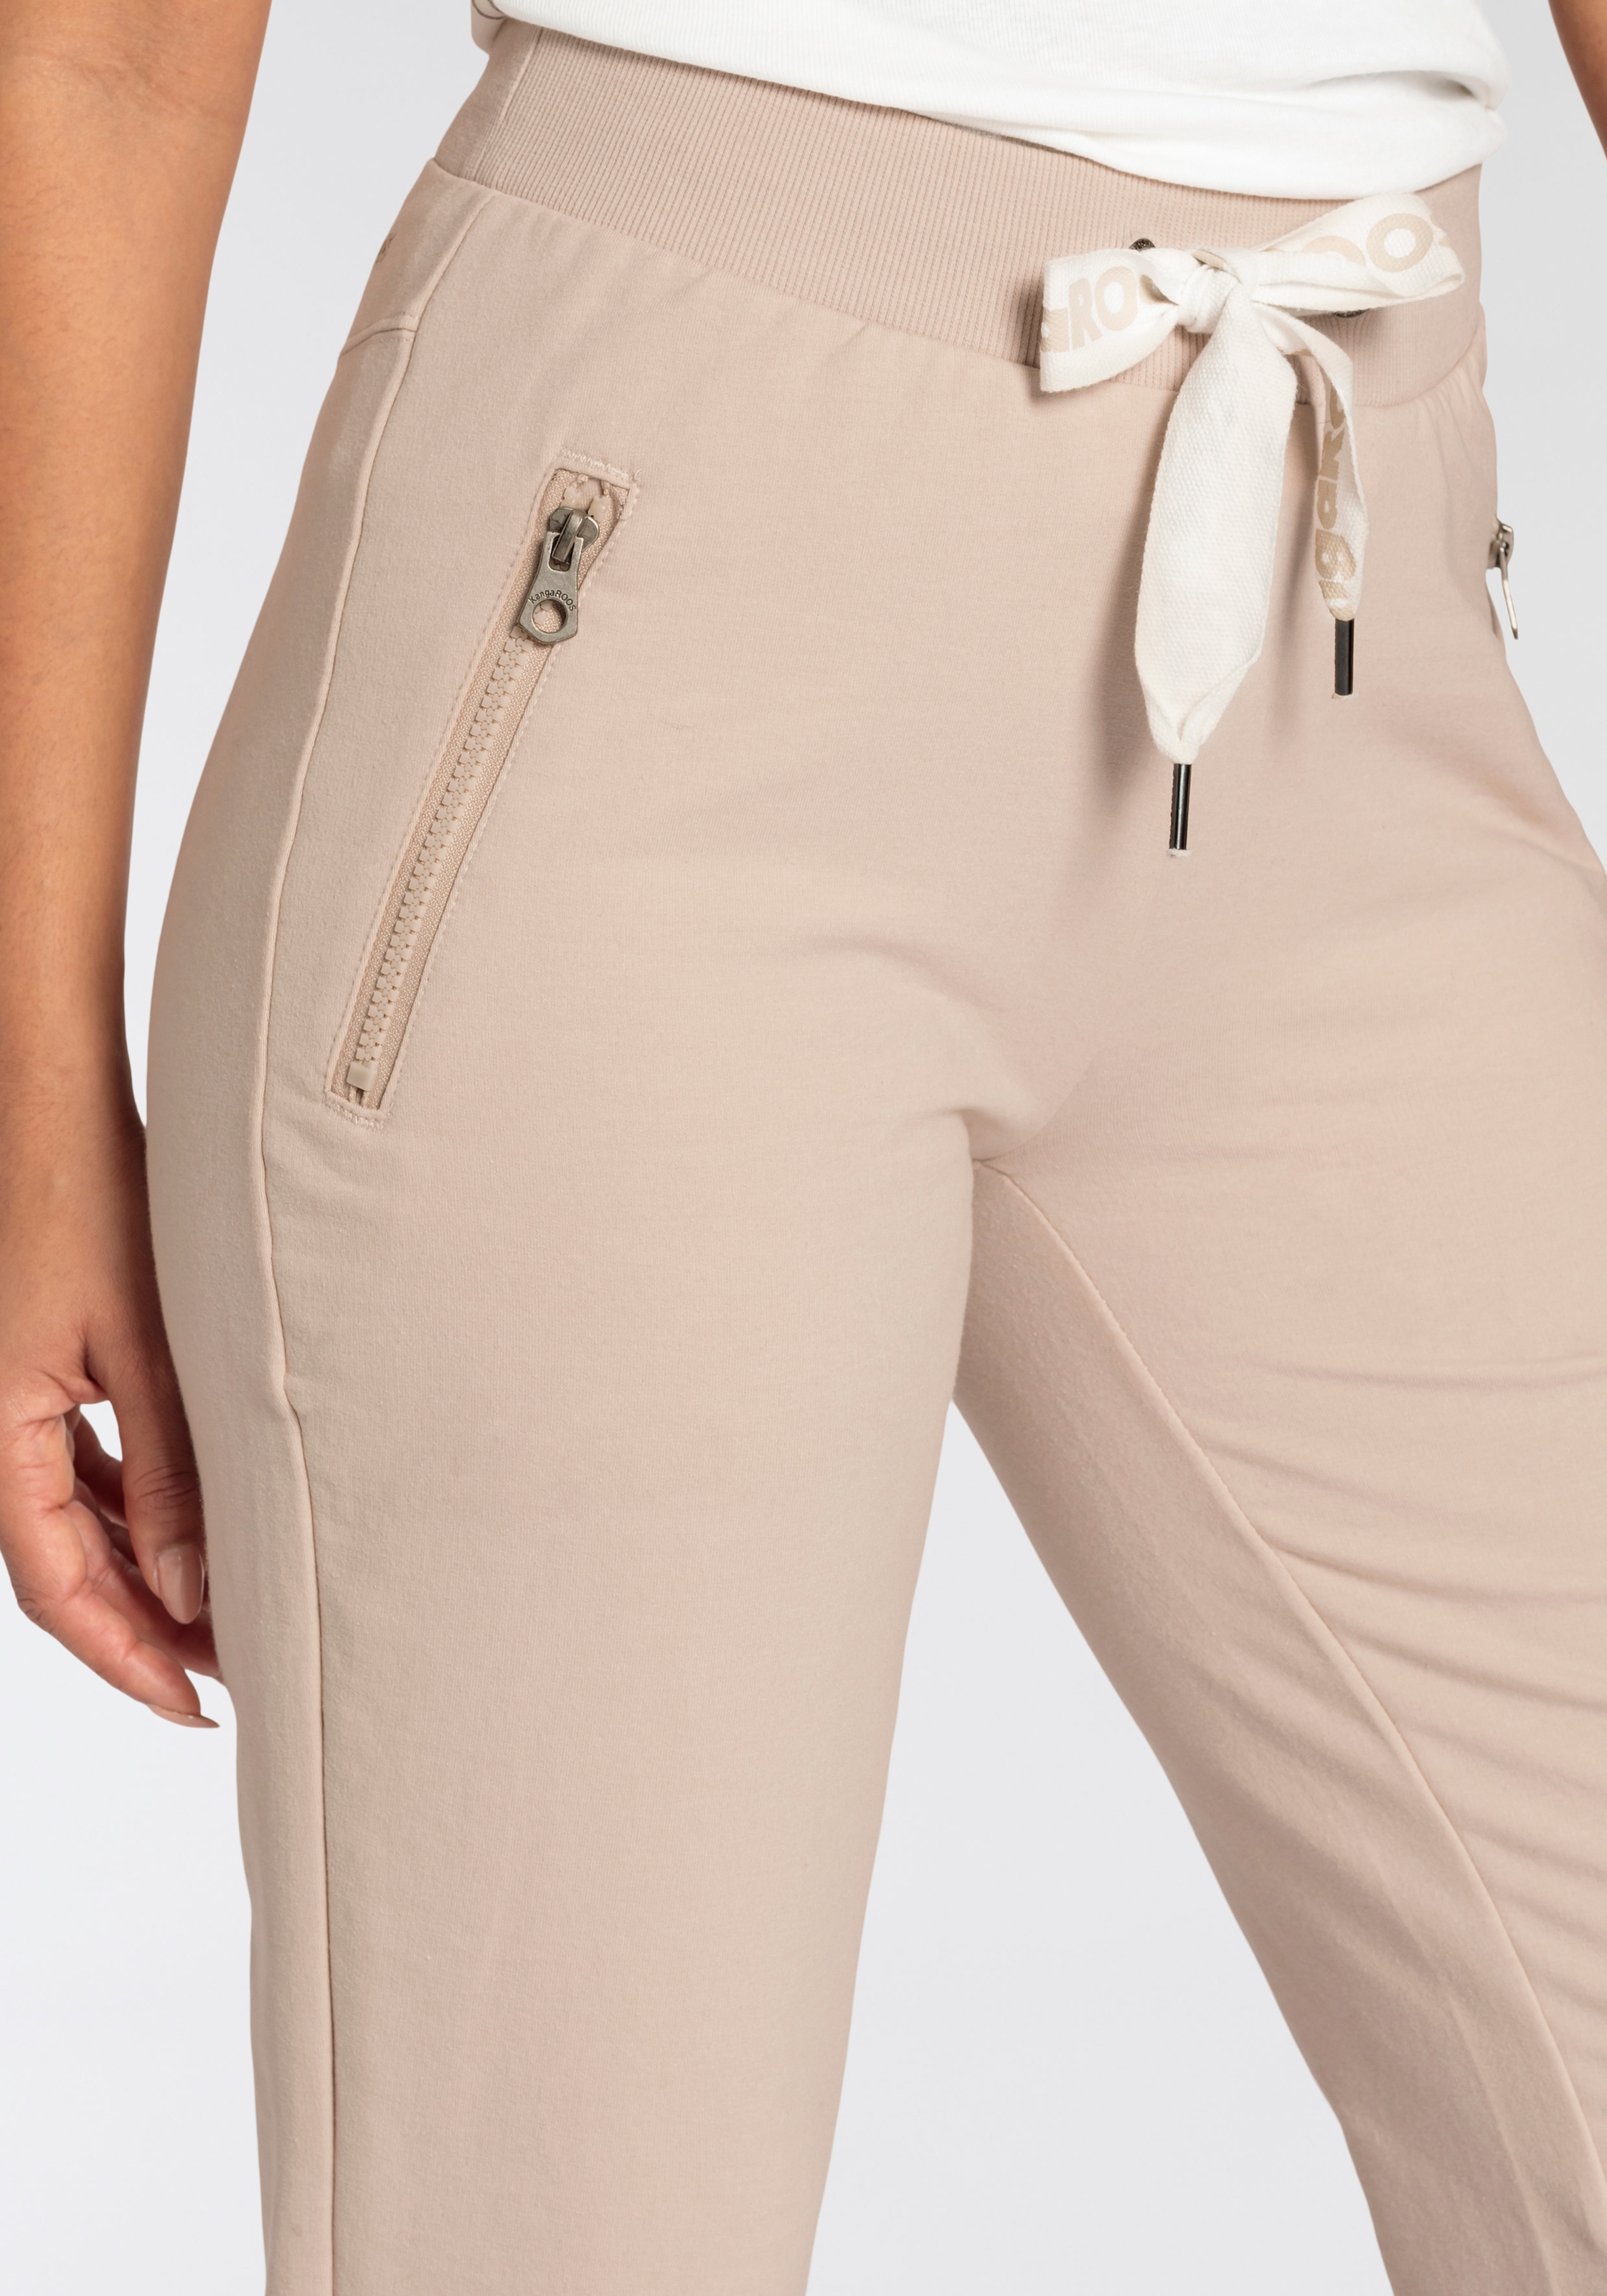 KangaROOS Jogger Pants, Sweatpants mit Zippertaschen und Logo String - NEUE-KOLLEKTION